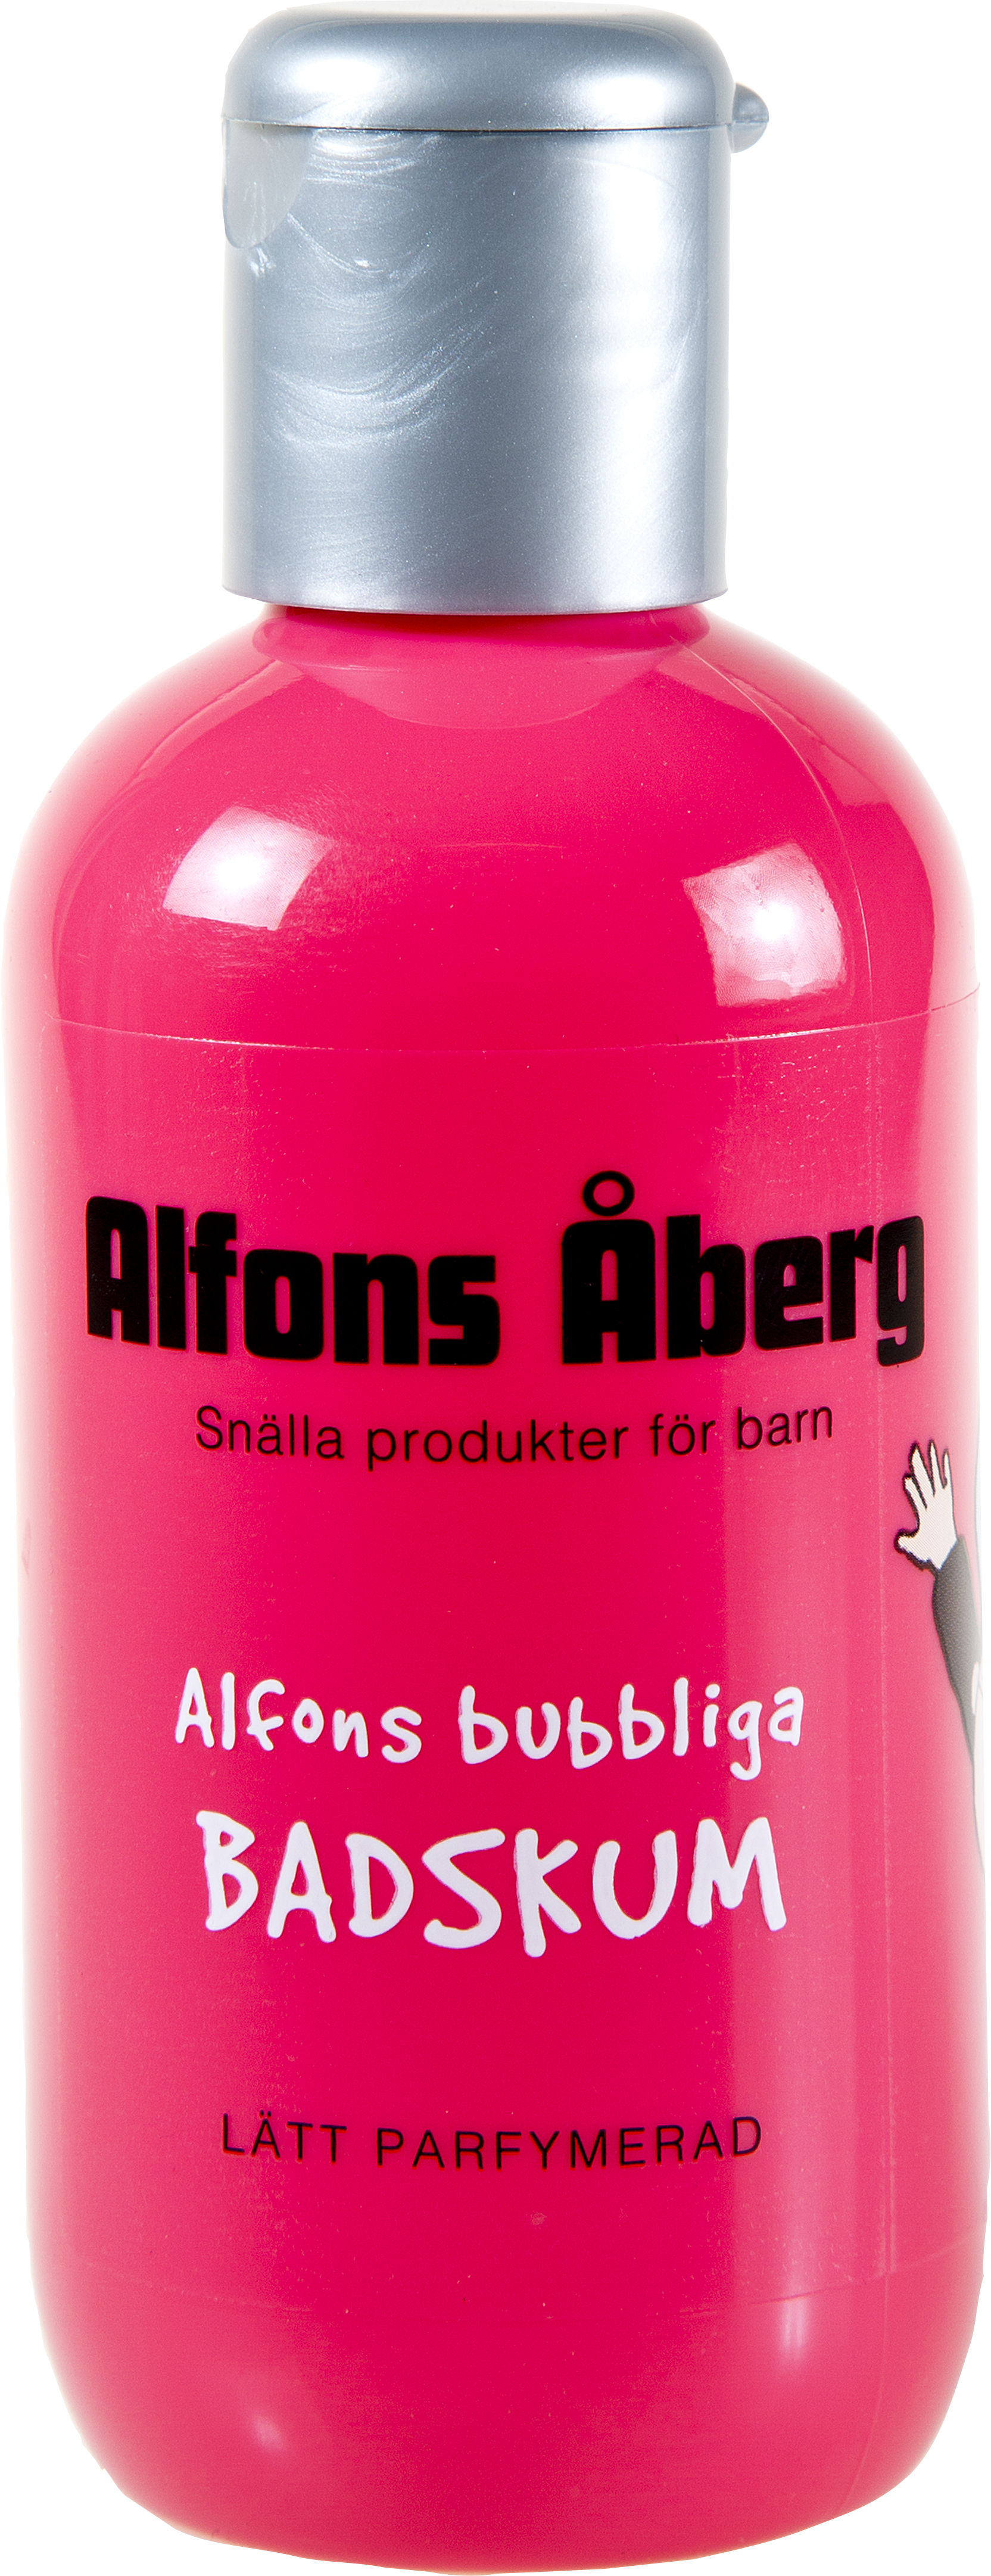 Alfons bubbliga badskum 200 ml